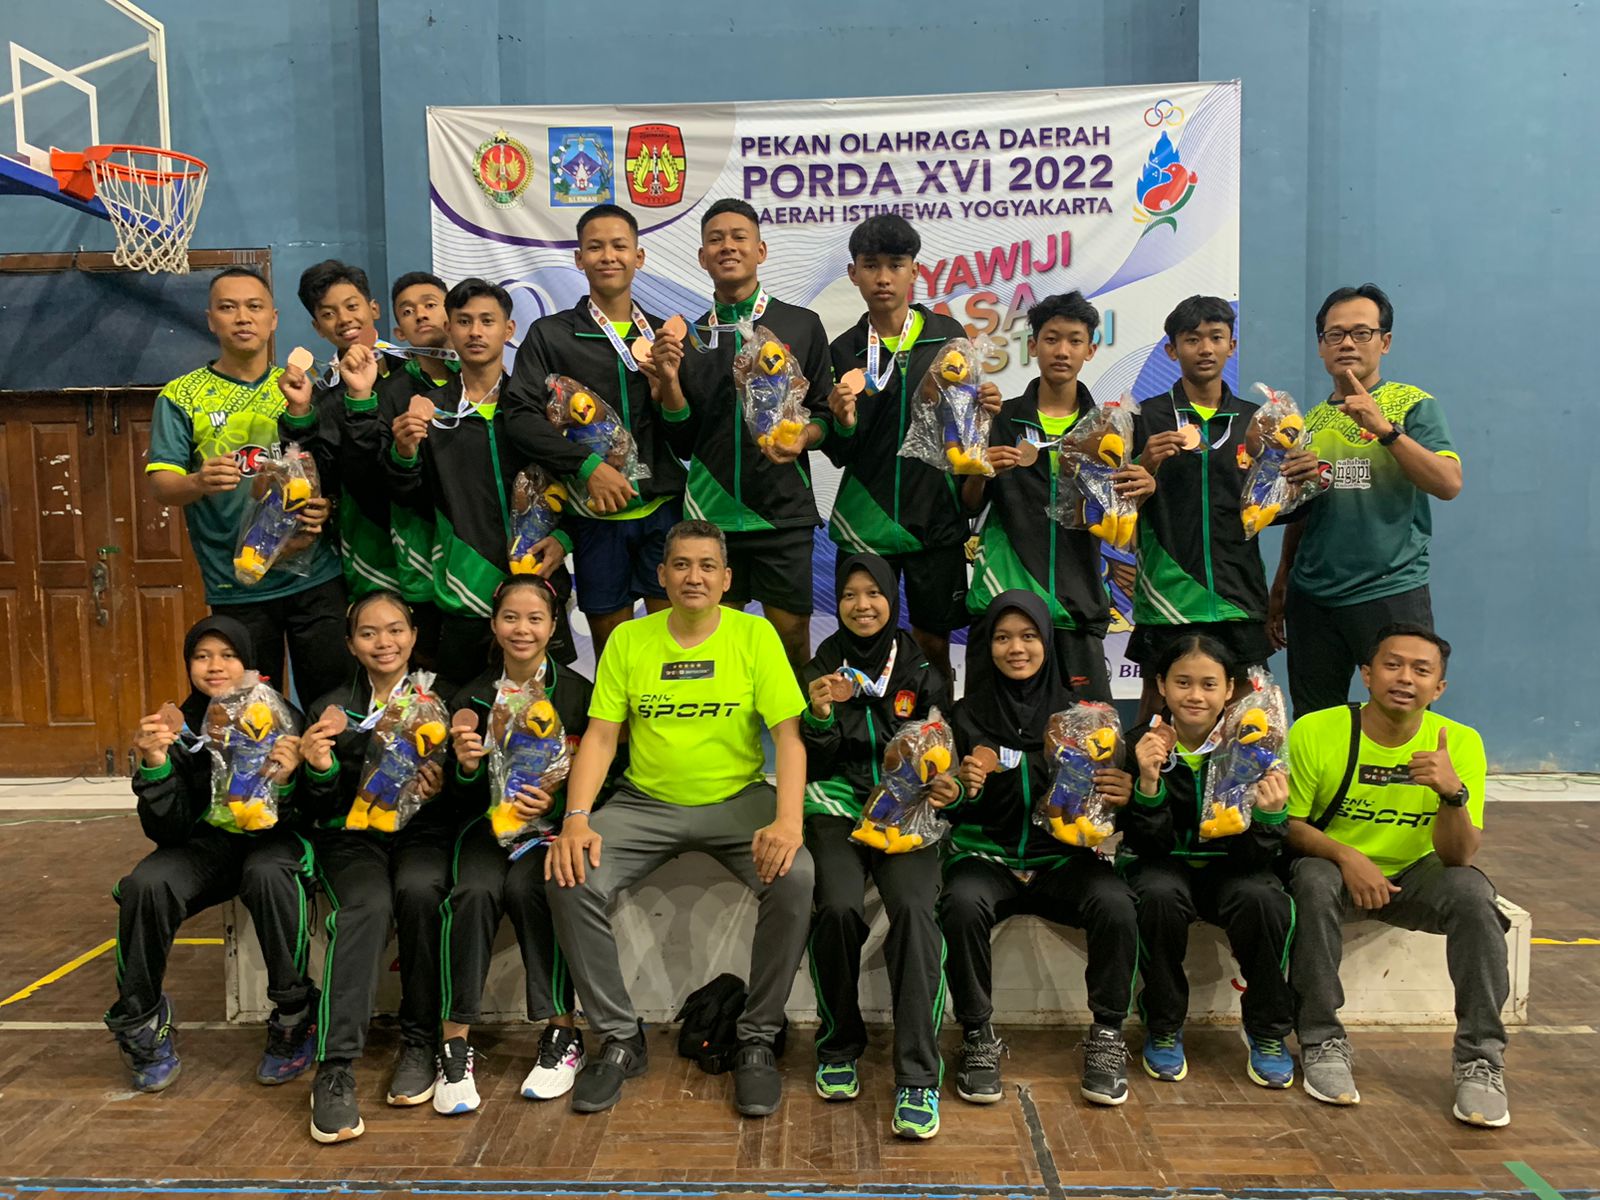 Foto Pekan Olahraga Daerah (PORDA) DI Yogyakarta XVI Tahun 2022